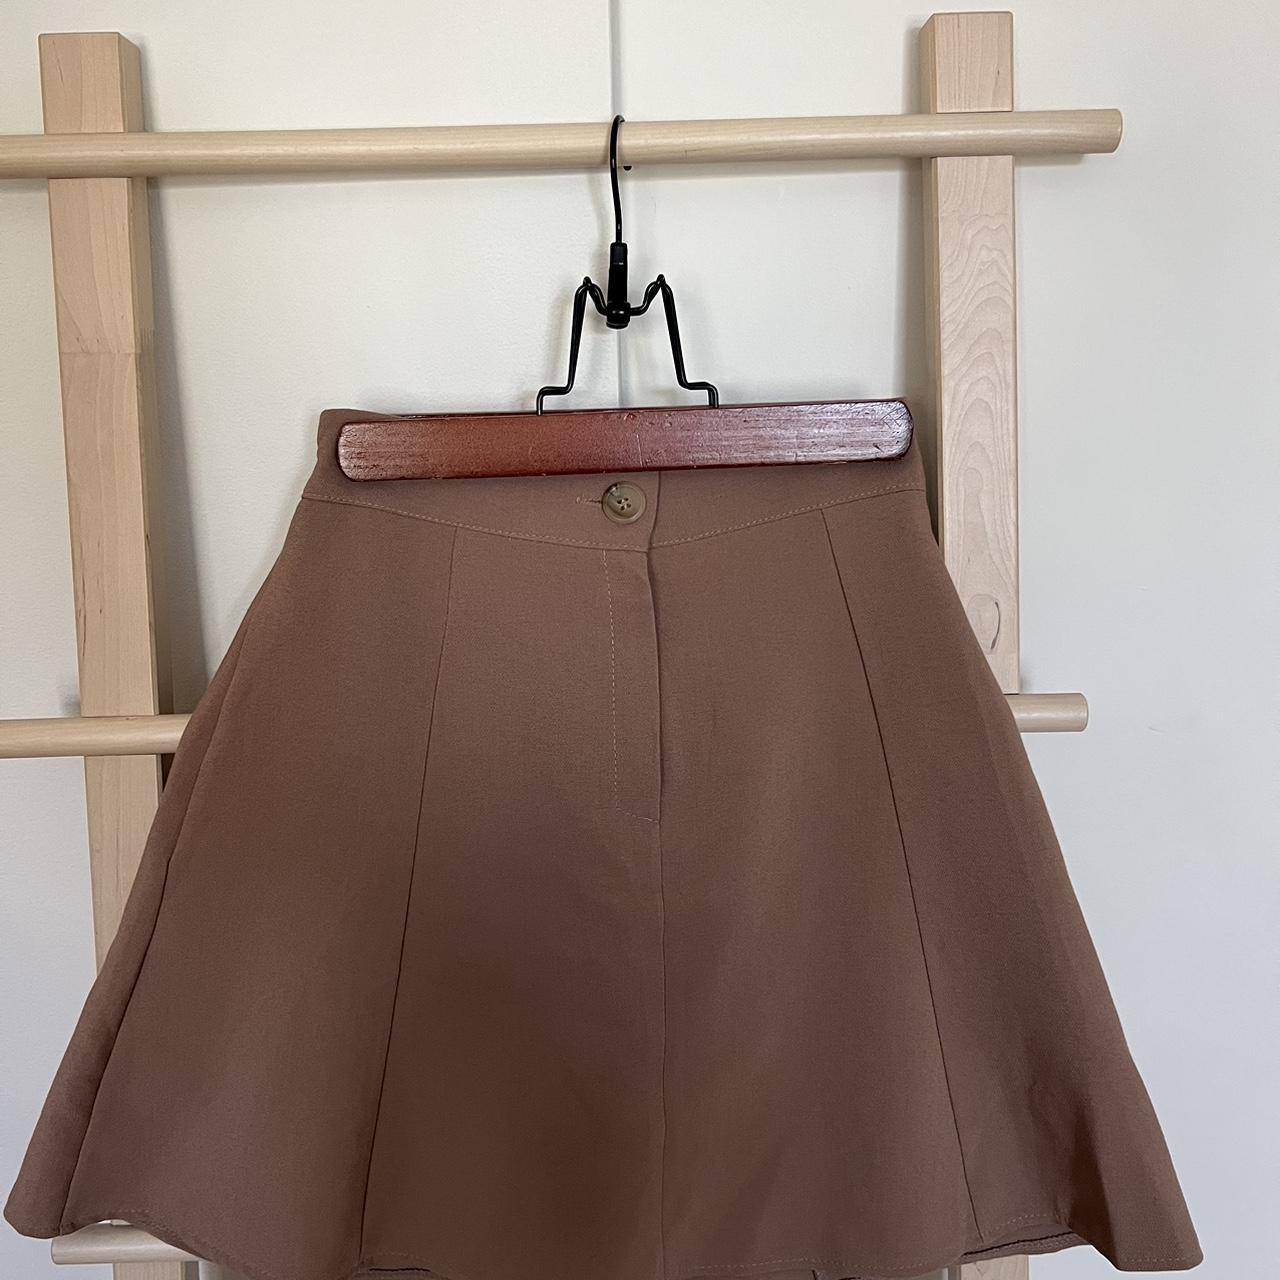 Oak + Fort Women's Skirt | Depop